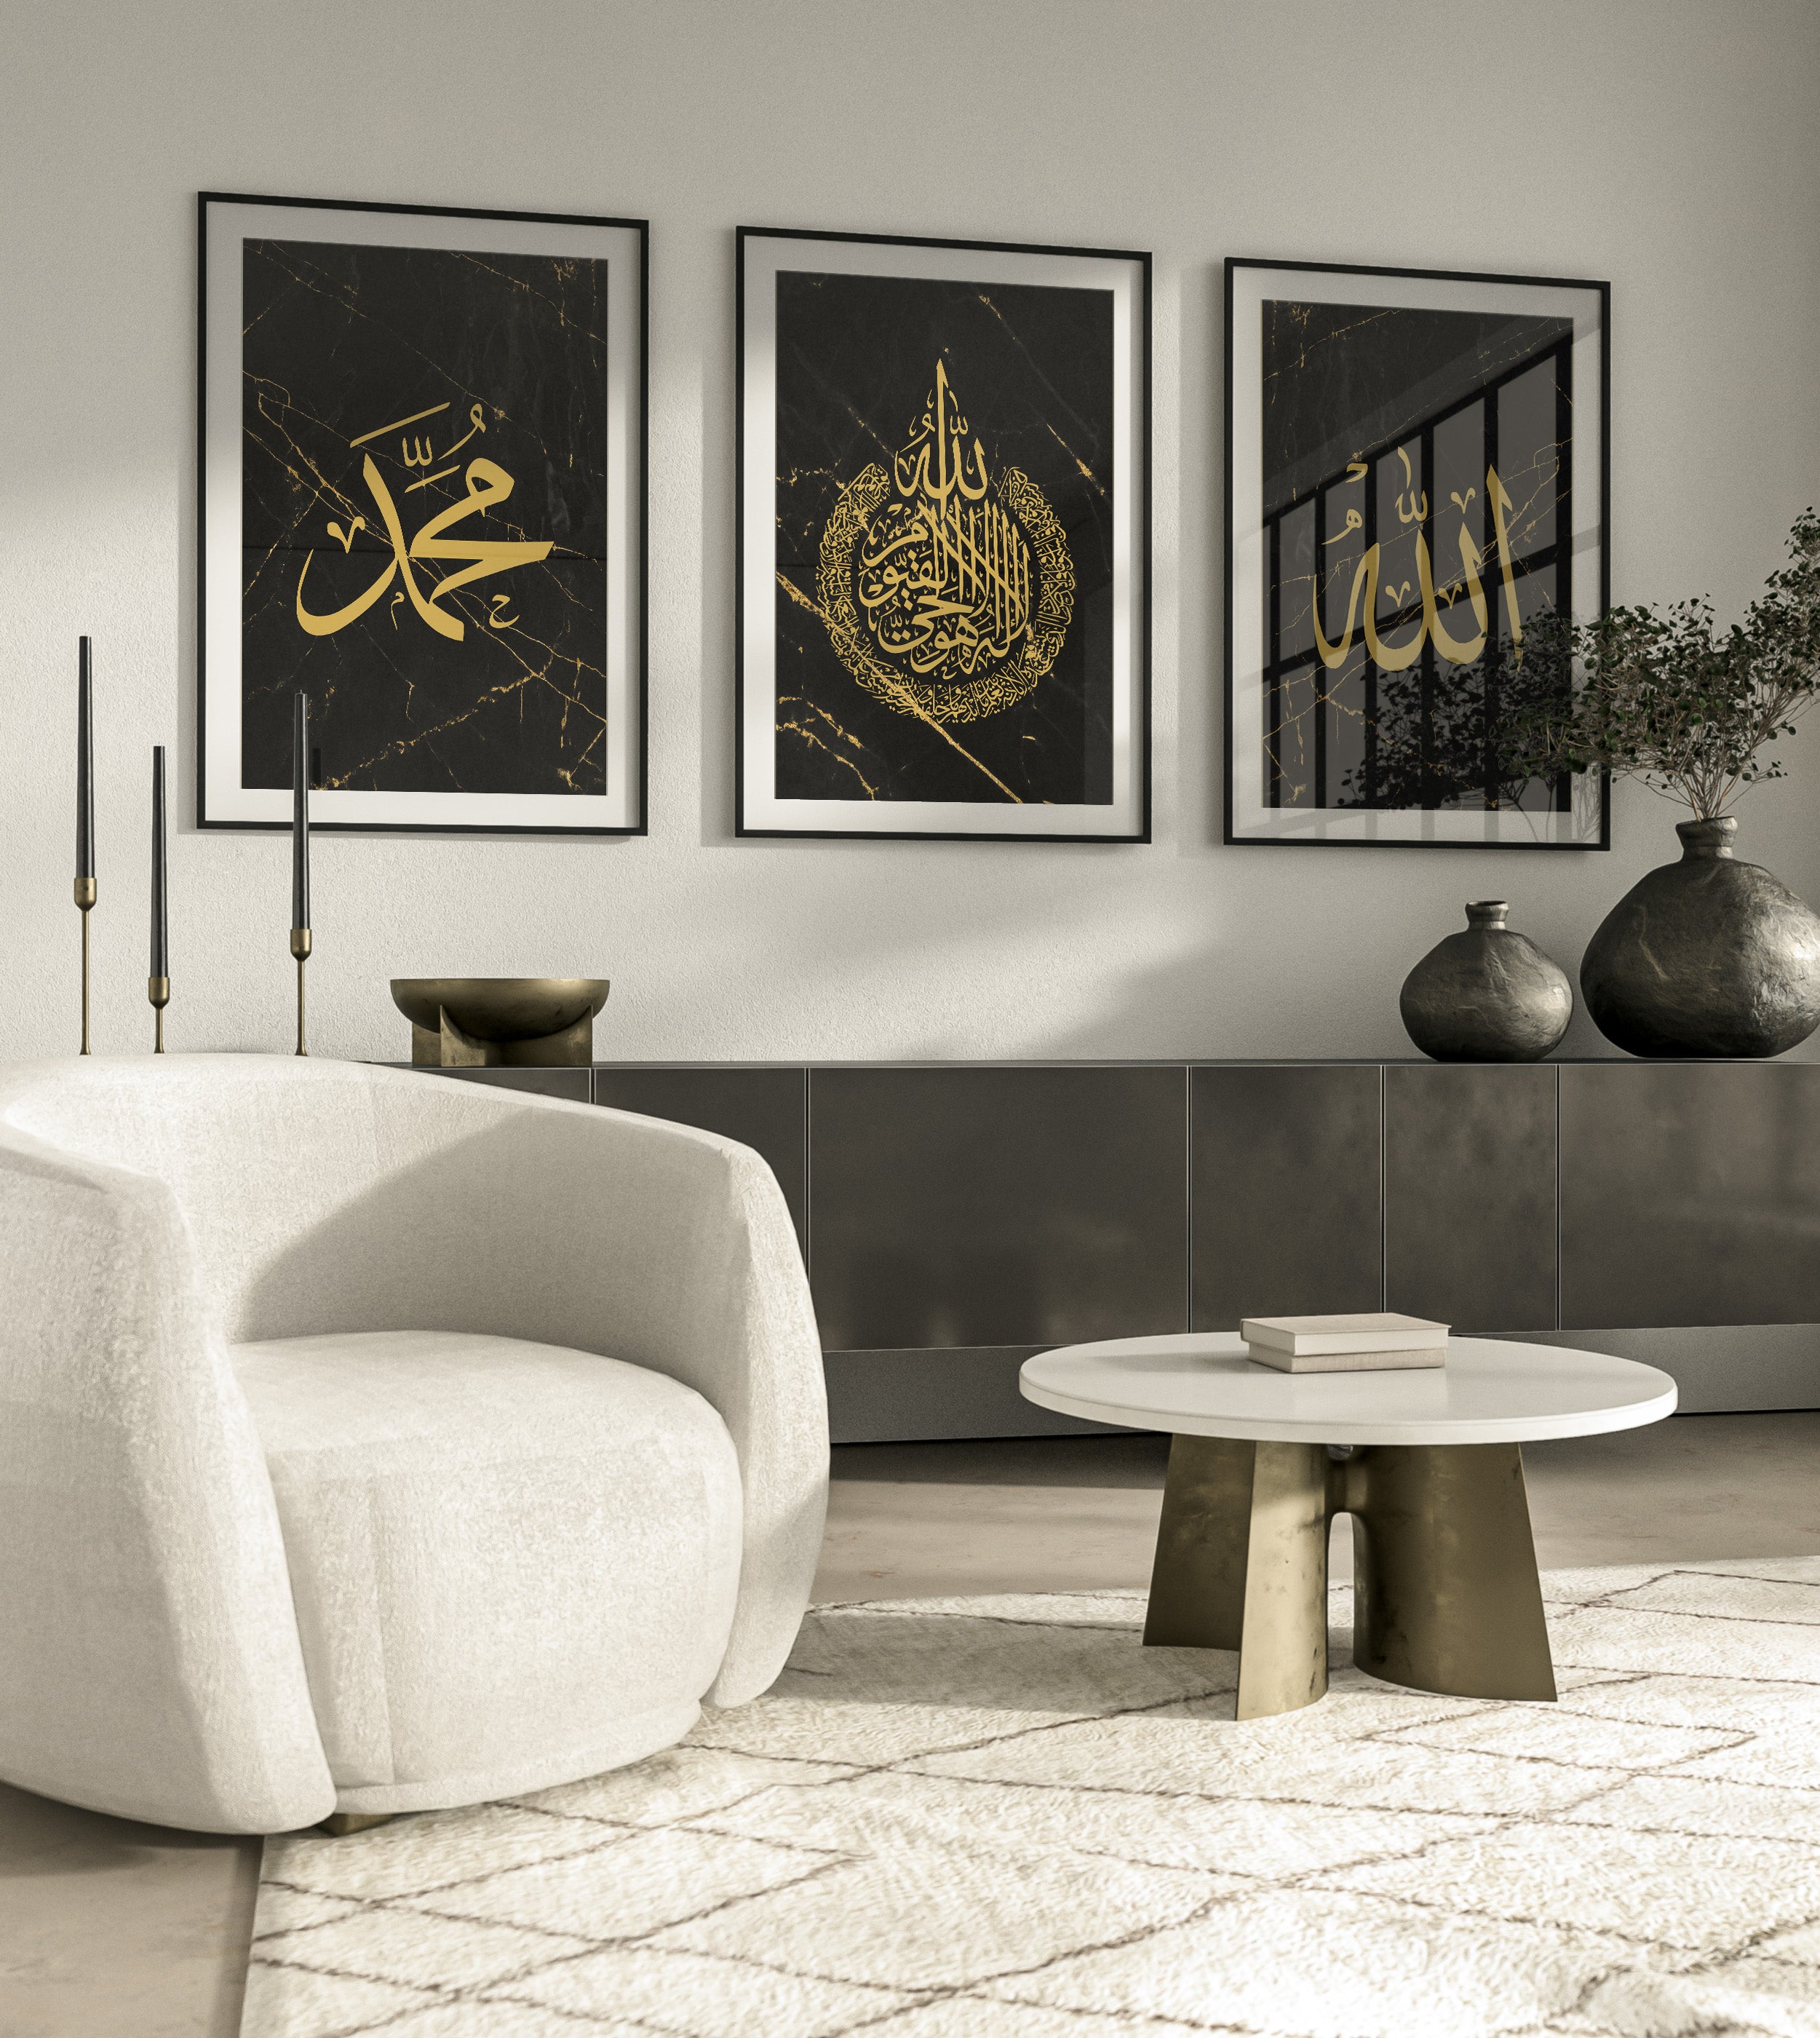 Set of 3 Marble Gold Allah, Ayatul Kursi, Muhammad Calligraphy Islamic Wall Art Prints - Peaceful Arts UK